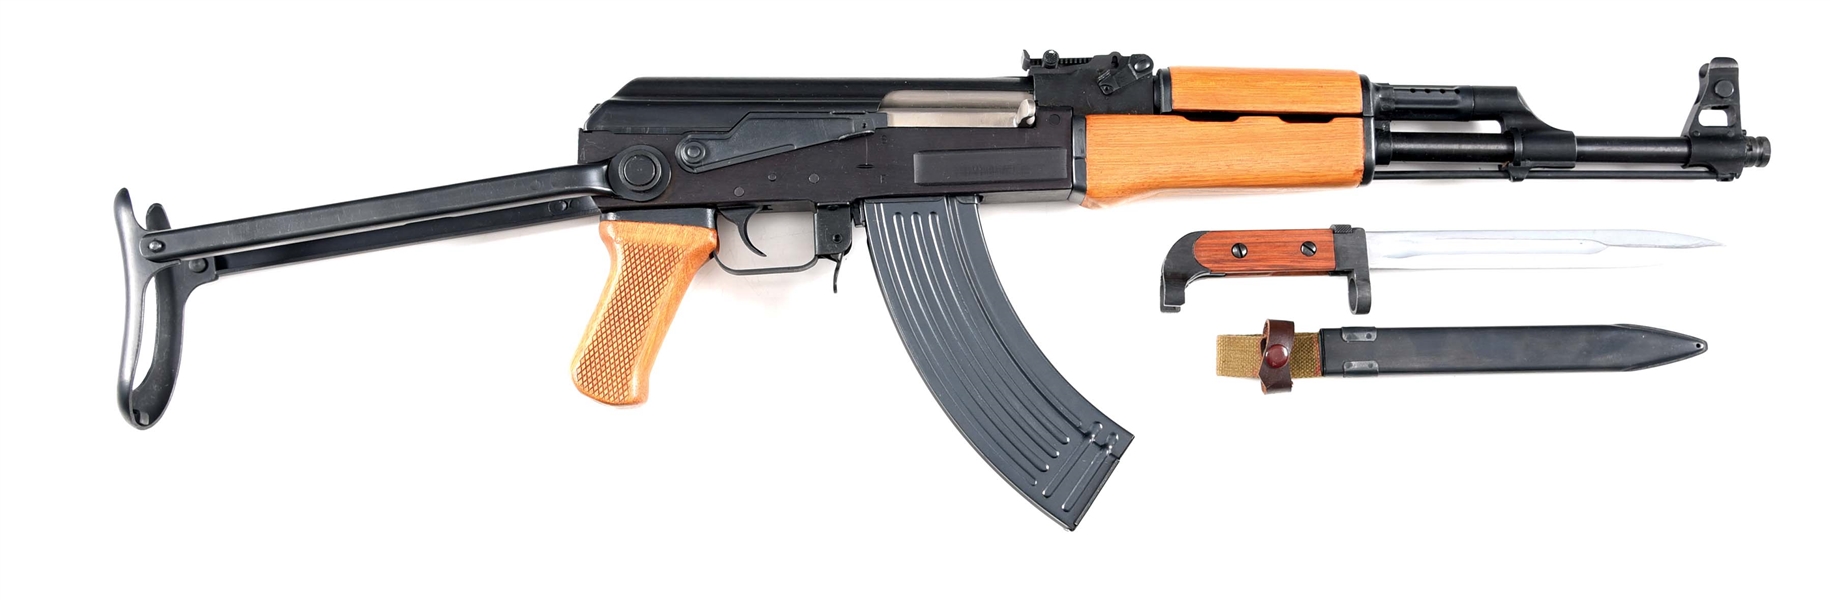 (M) POLYTECH AK-47S SEMI AUTOMATIC RIFLE.